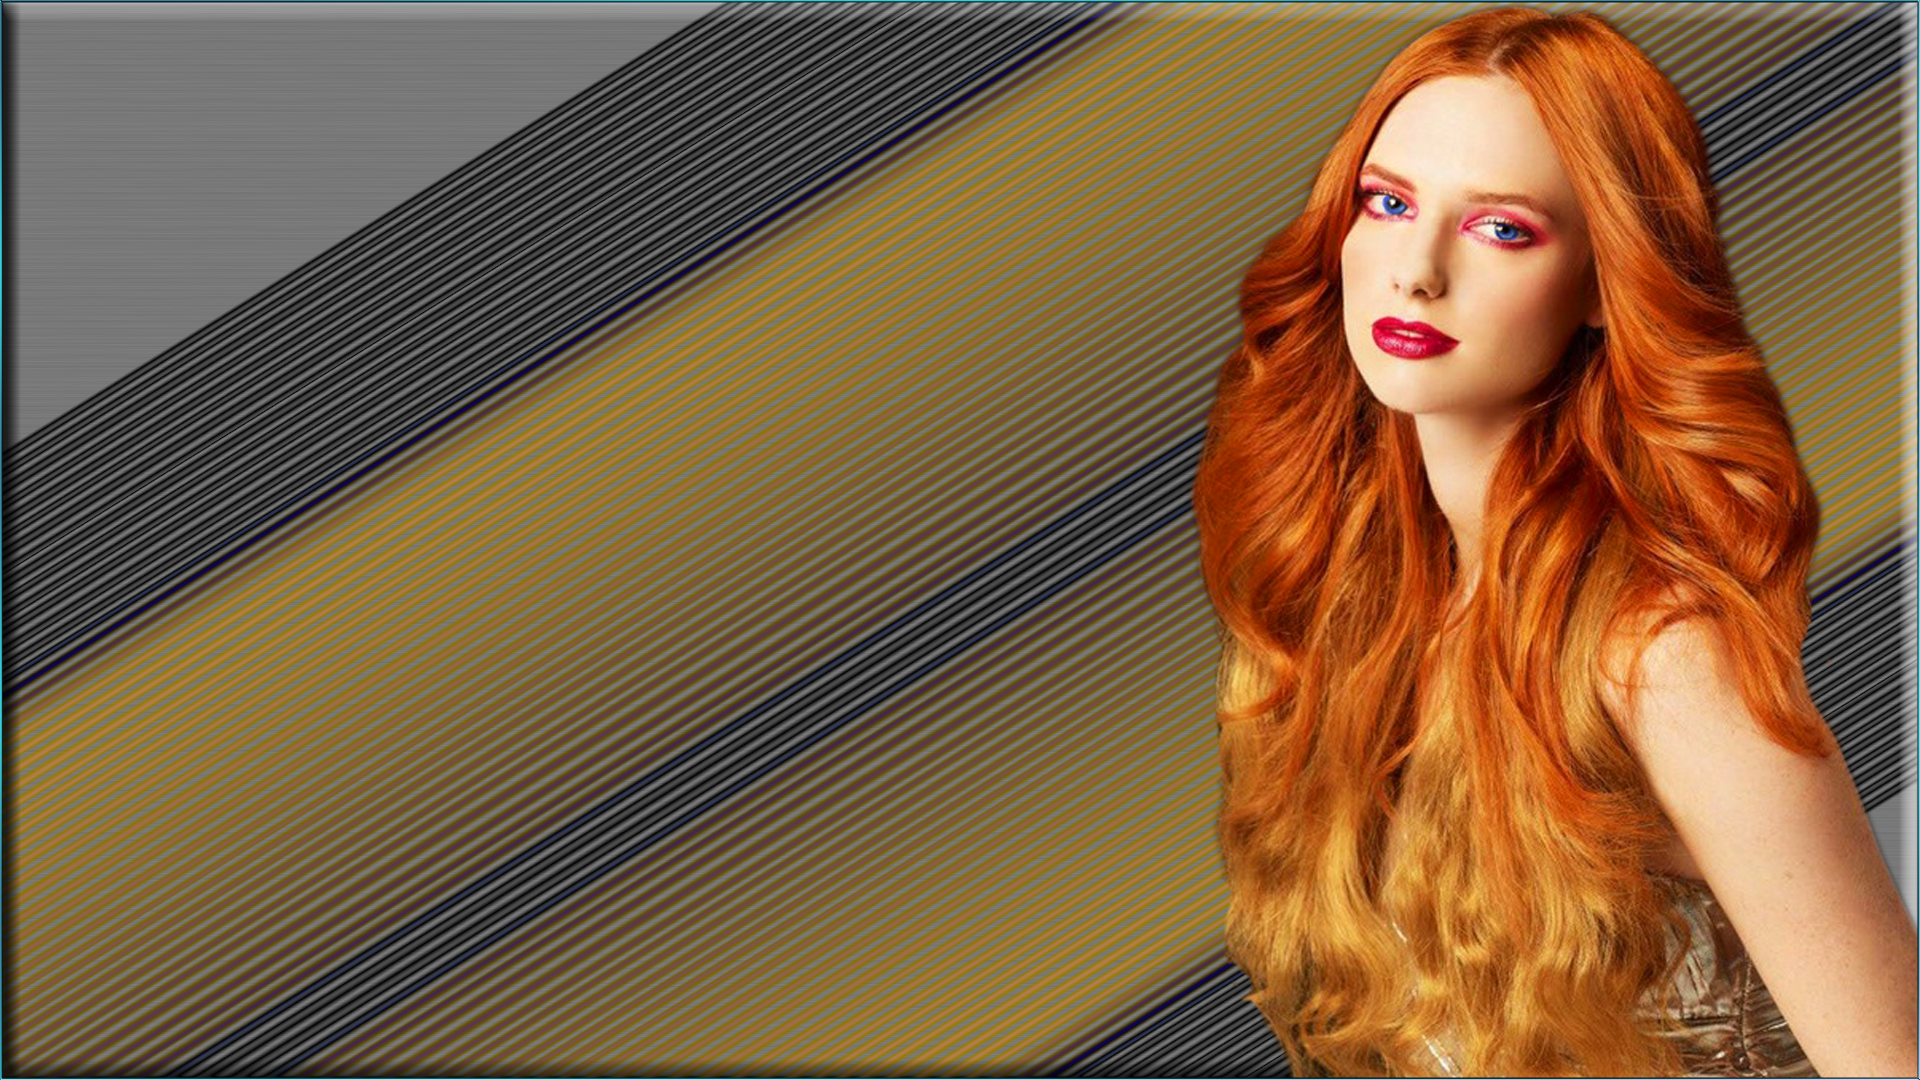 Beautiful Redhead Hd Wallpaper Background Image 1920x1080 Id 381255 Wallpaper Abyss